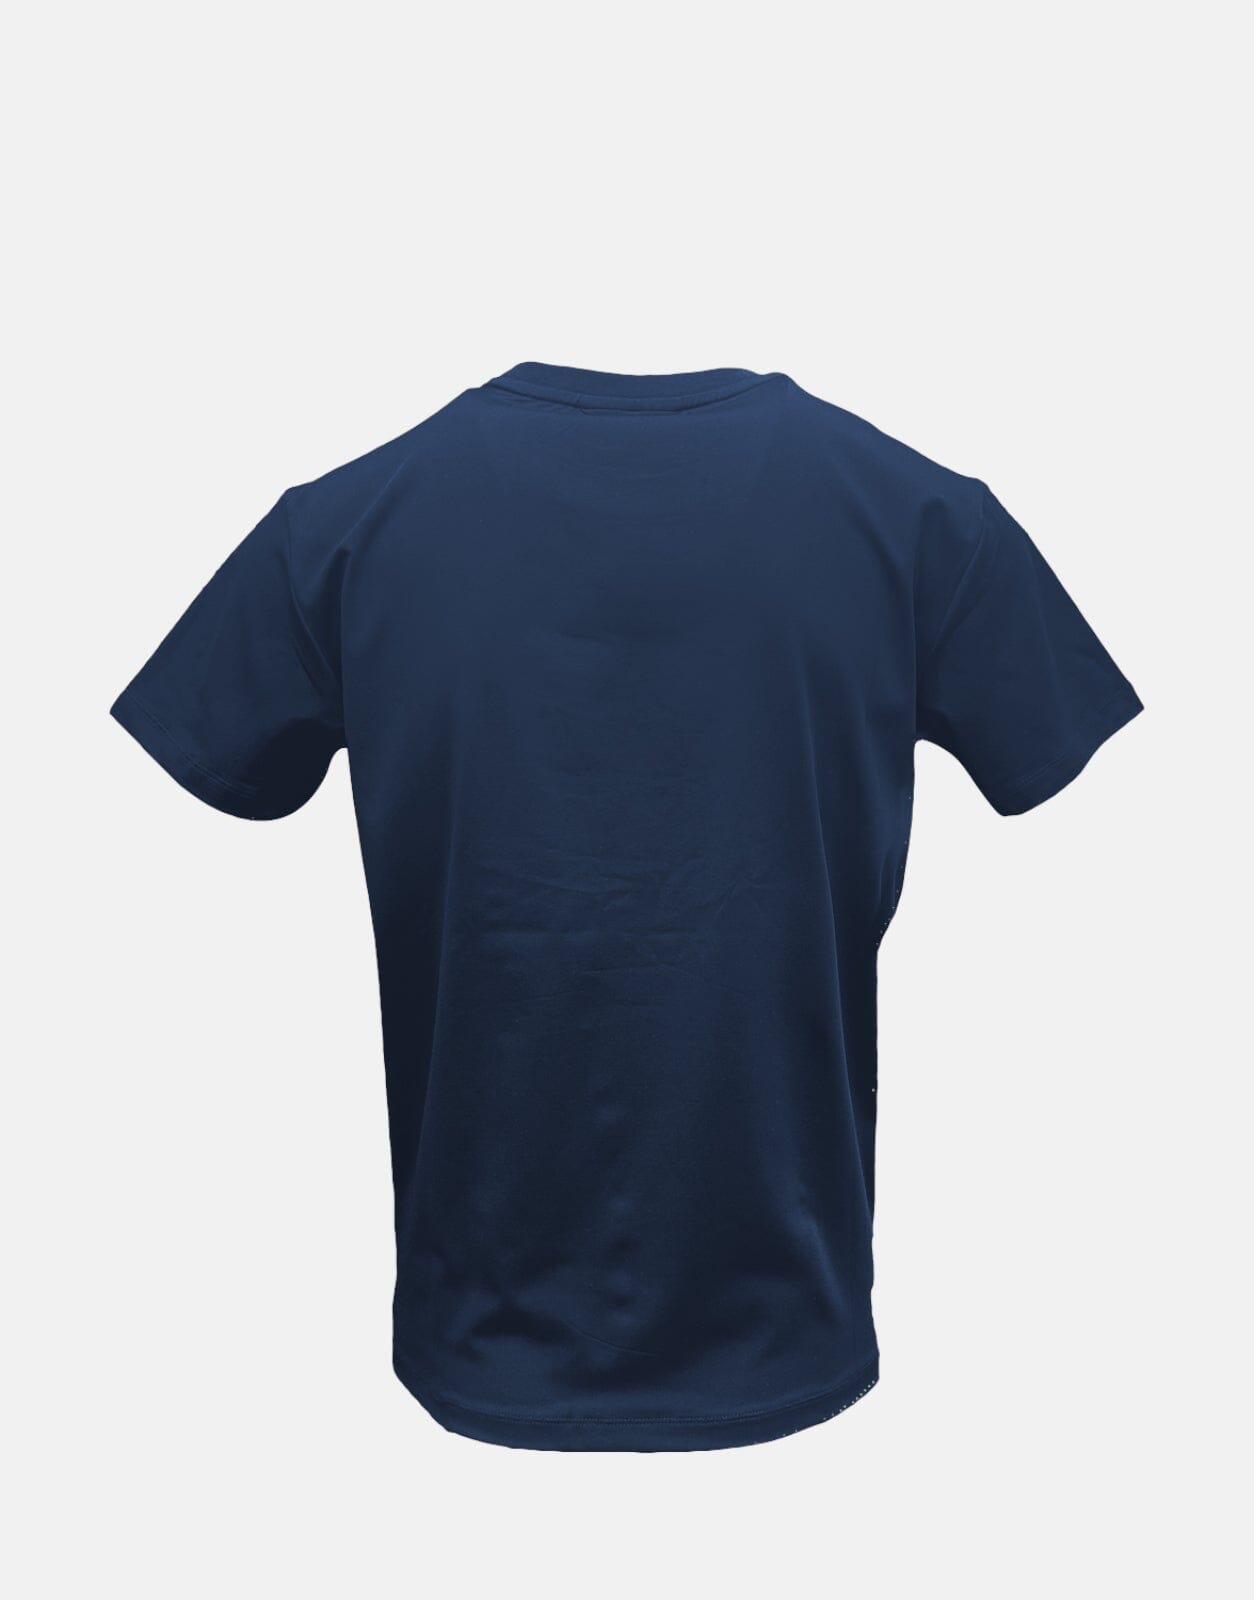 Vialli Freedom Navy T-Shirt - Subwear